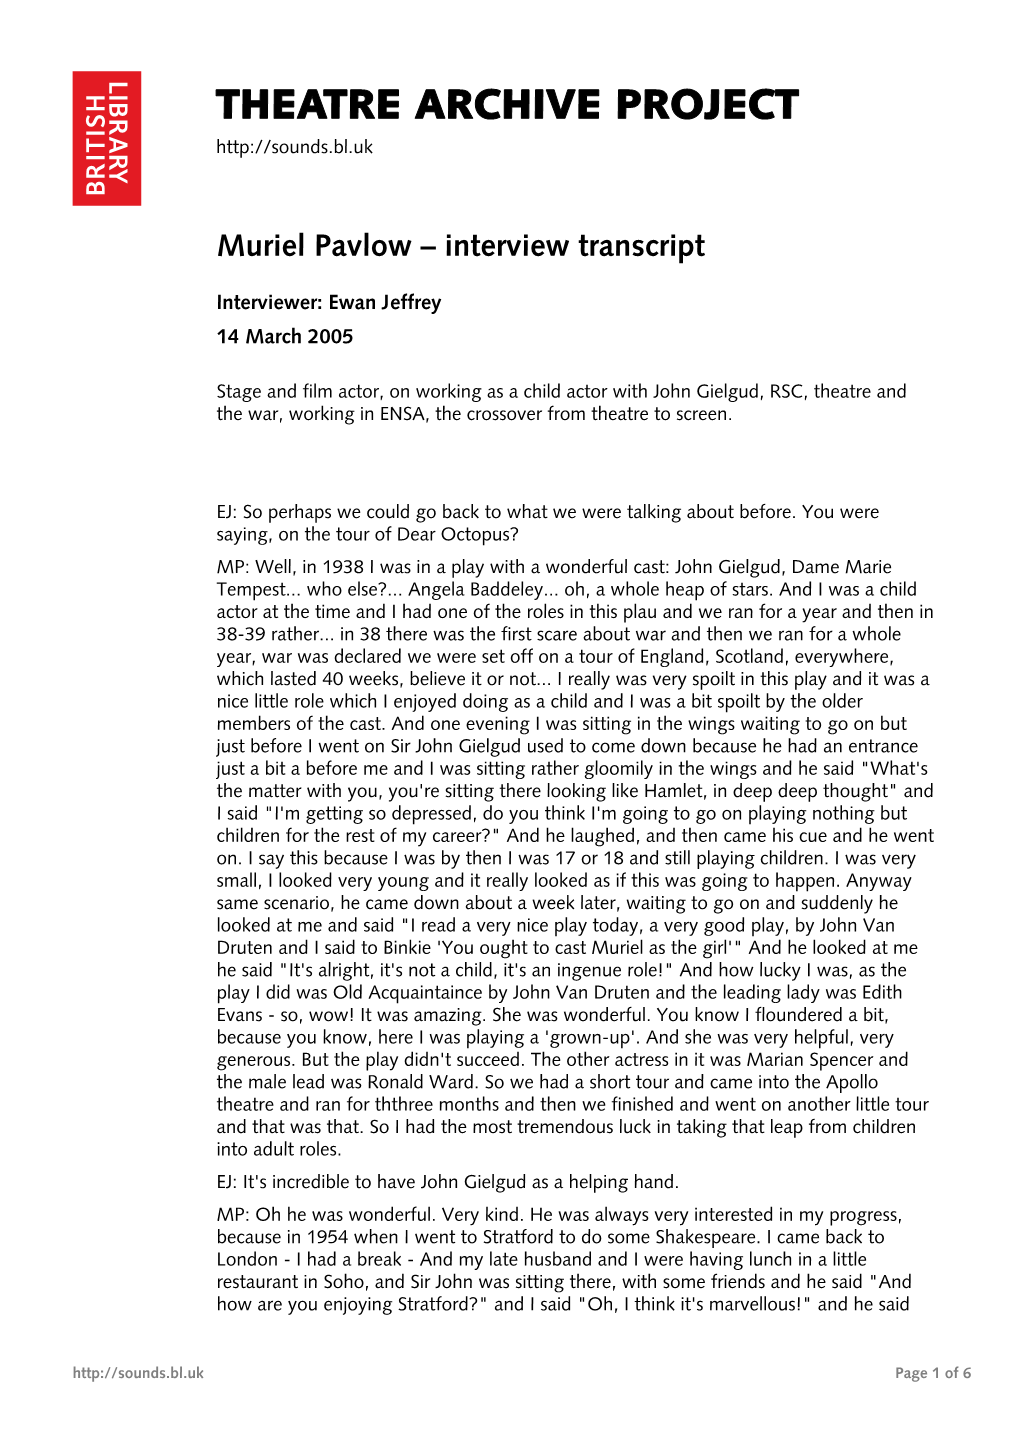 Interview with Muriel Pavlow